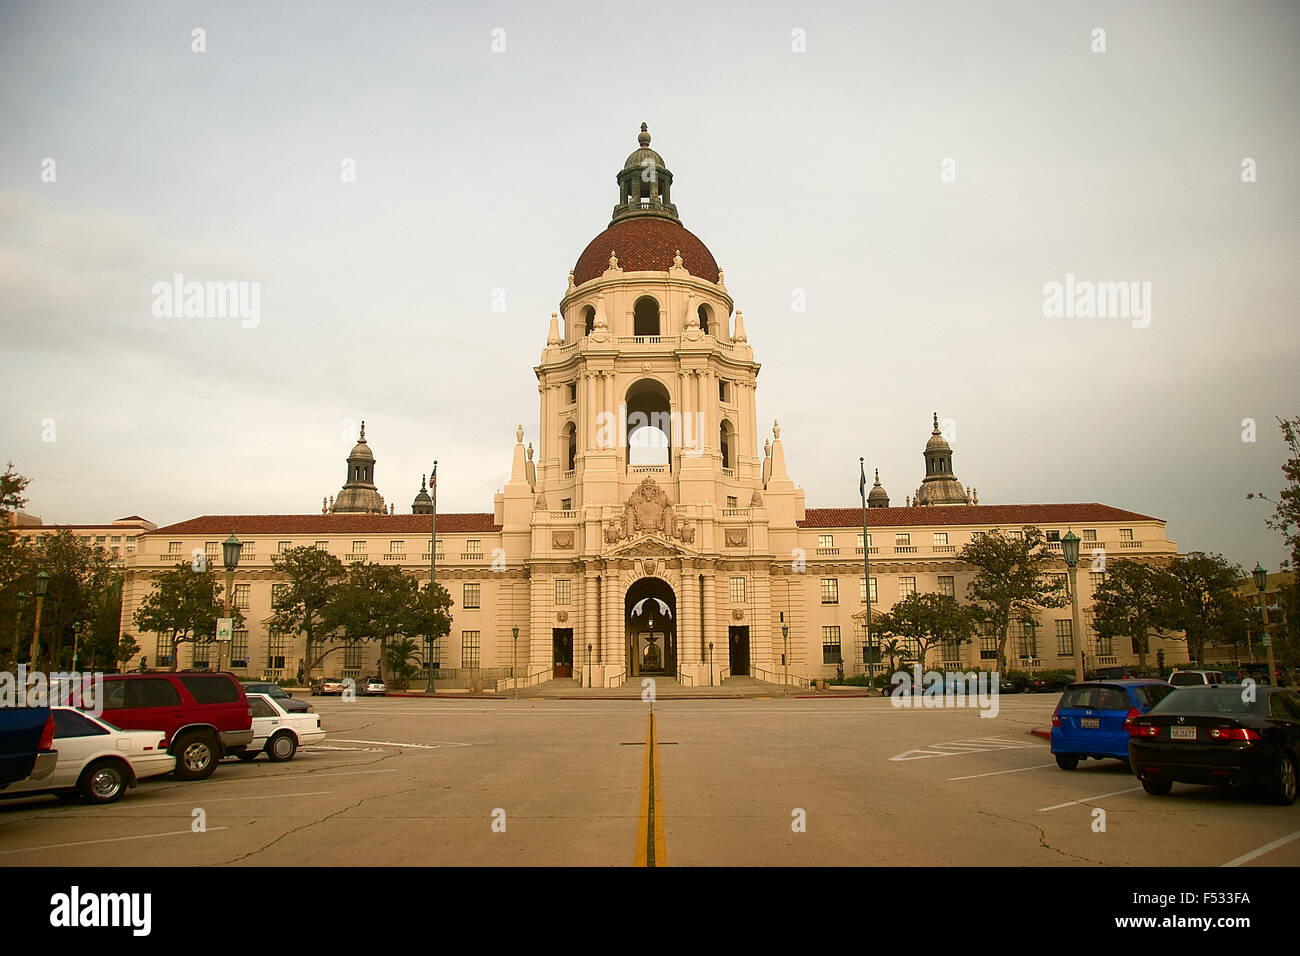 Pasadena - California, Beautiful picture of the city hall in Pasadena, California. Stock Photo